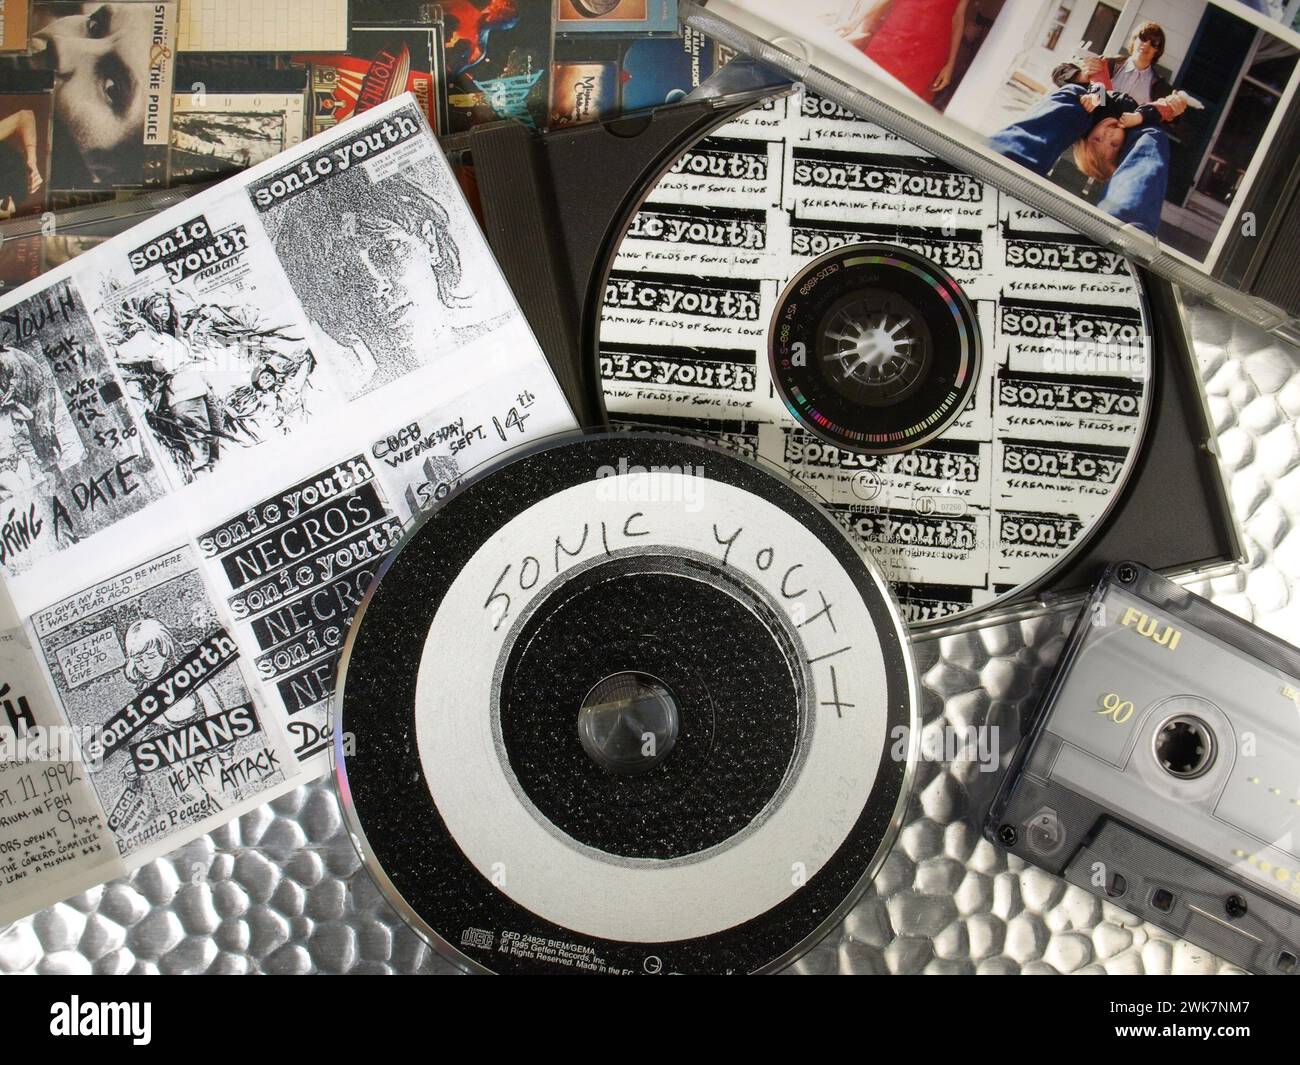 Musikausstellung - Sonic Youth CD - American Rock Band, New York City - gehämmerter Aluminiumhintergrund mit CD-Covern Stockfoto